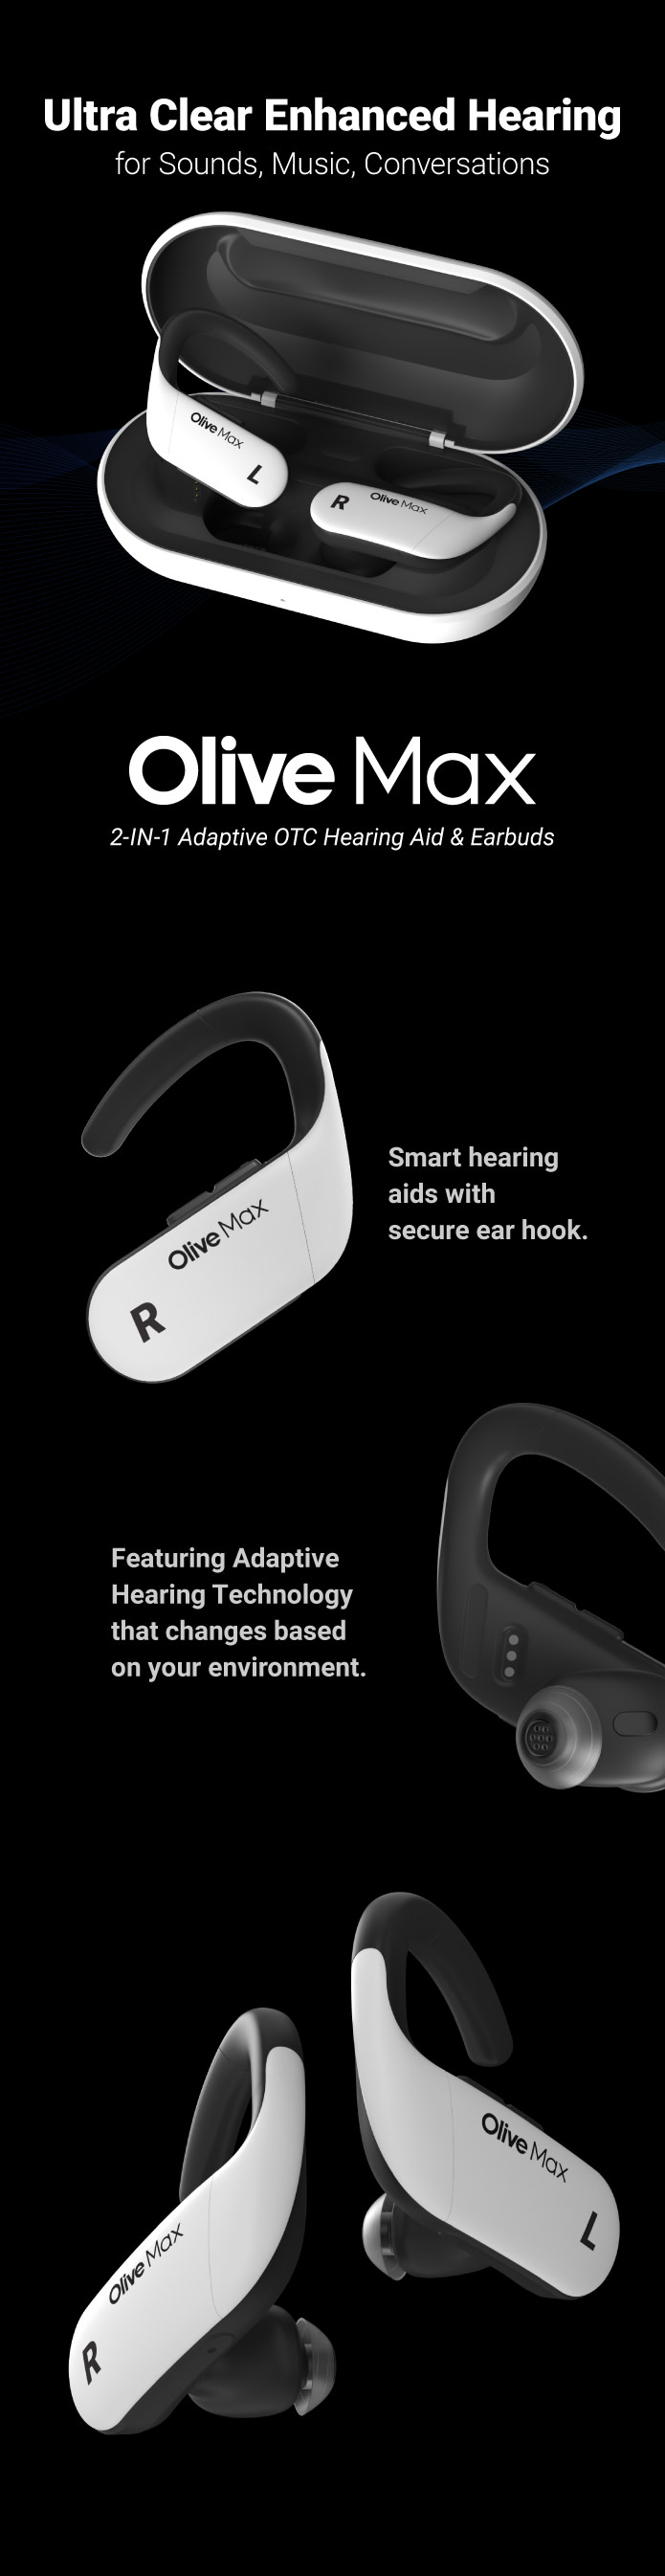 Olive Max: OTC Hearing Aid Earbud & Tinnitus App | Indiegogo